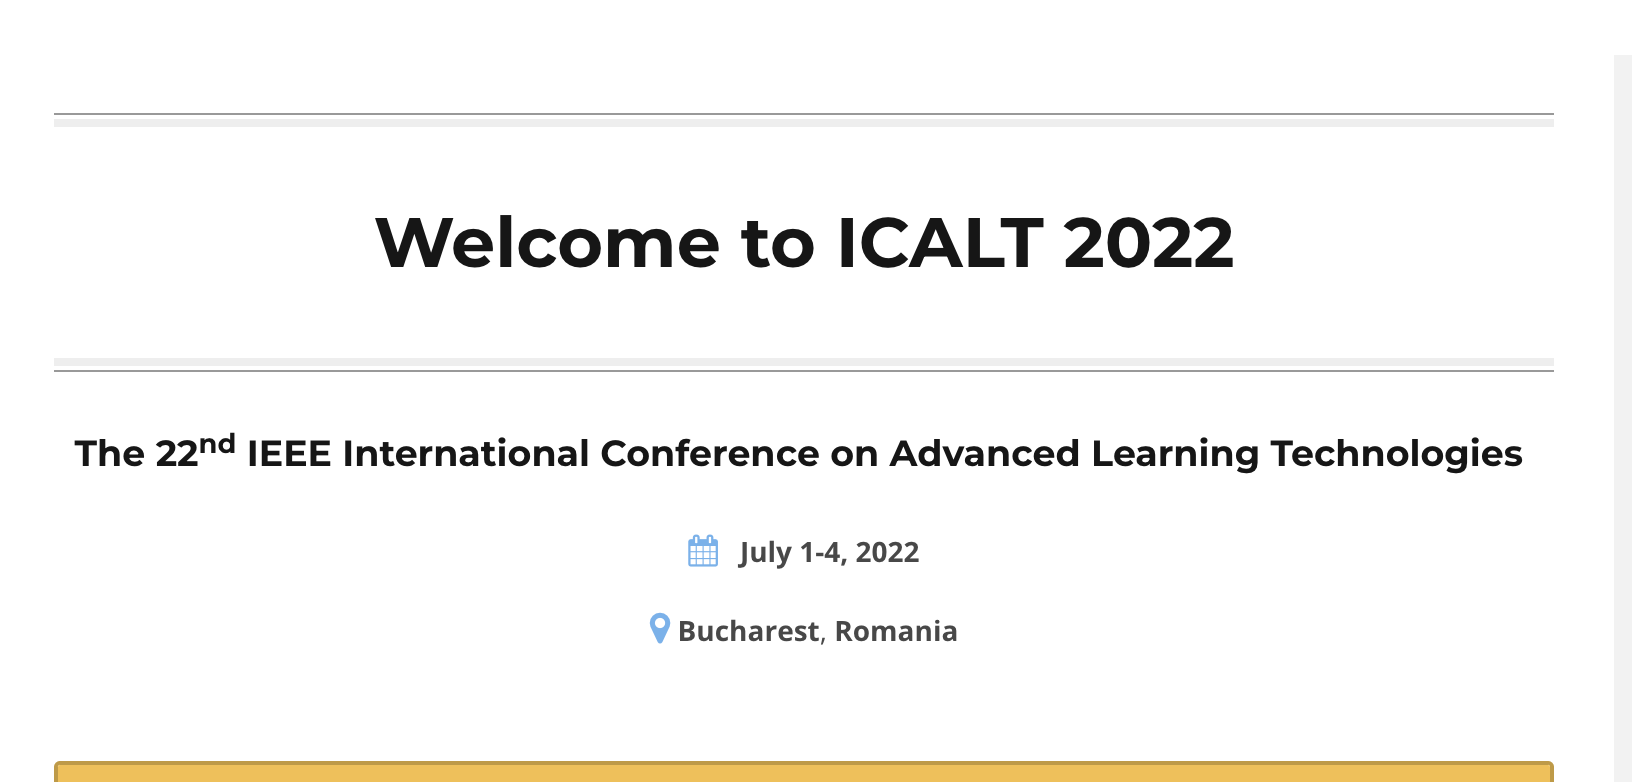 Participation at ICALT 2022